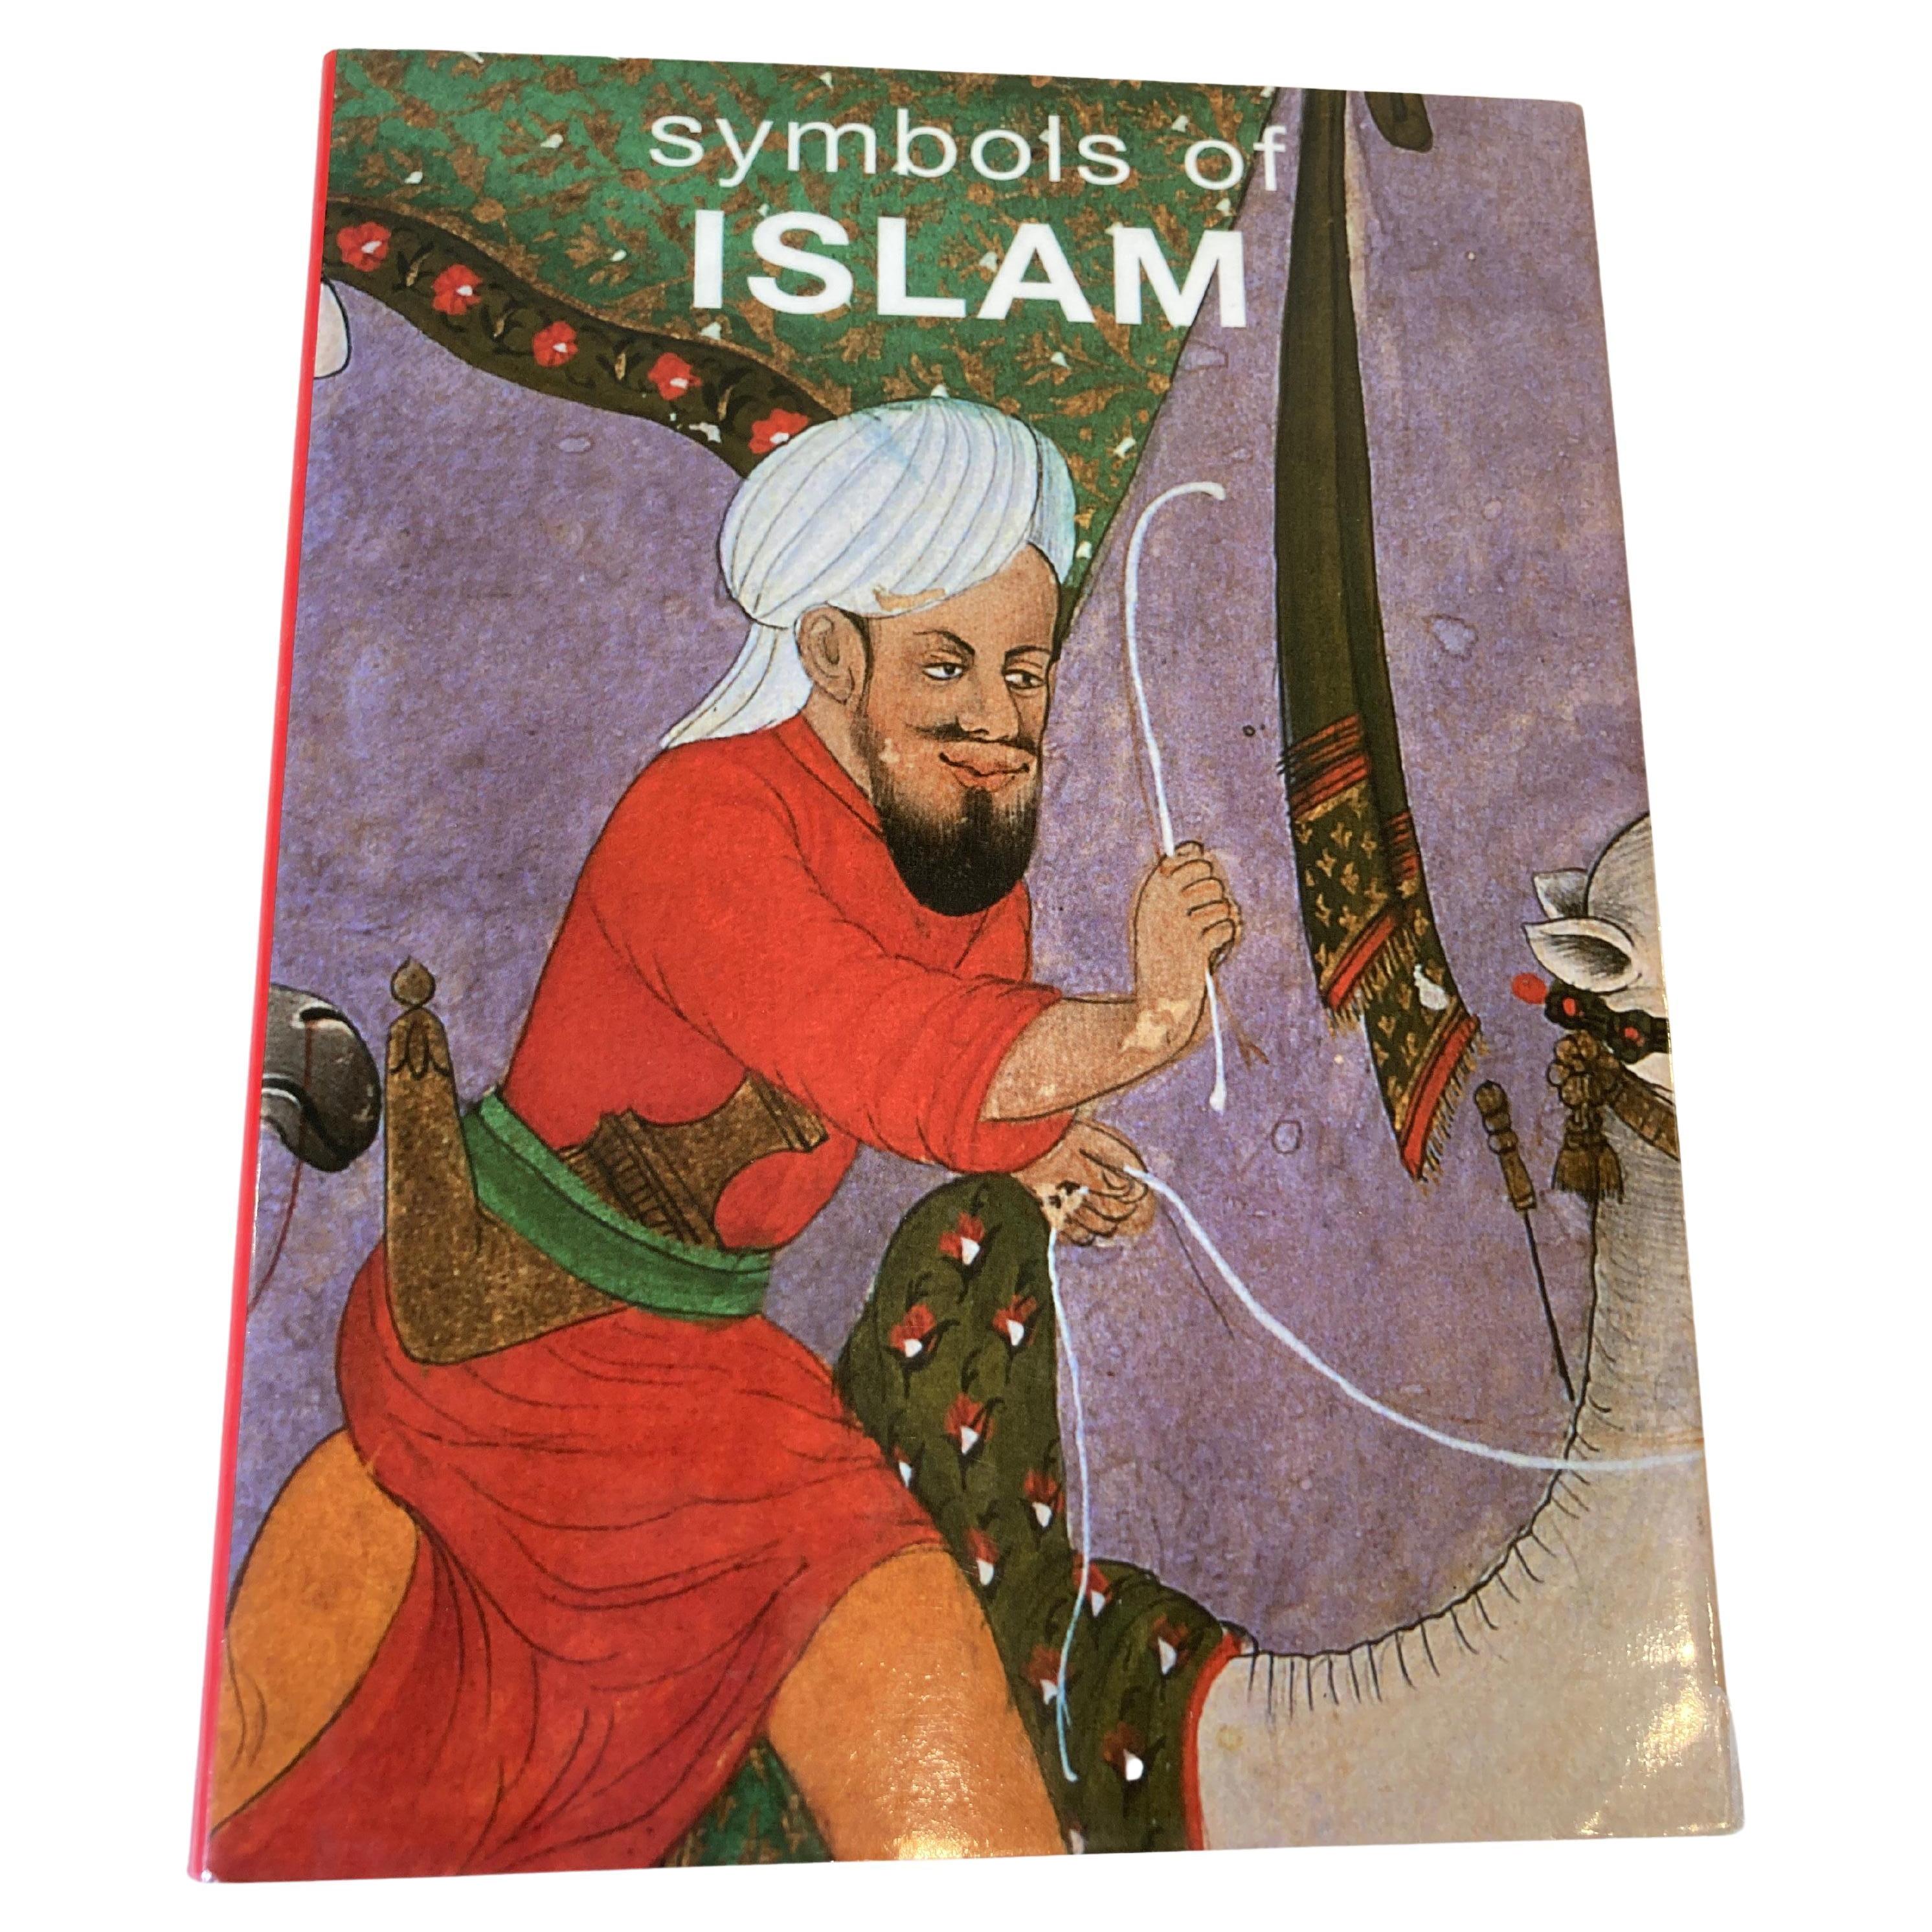  Symbols of Islam by Malek Chebel Art Book